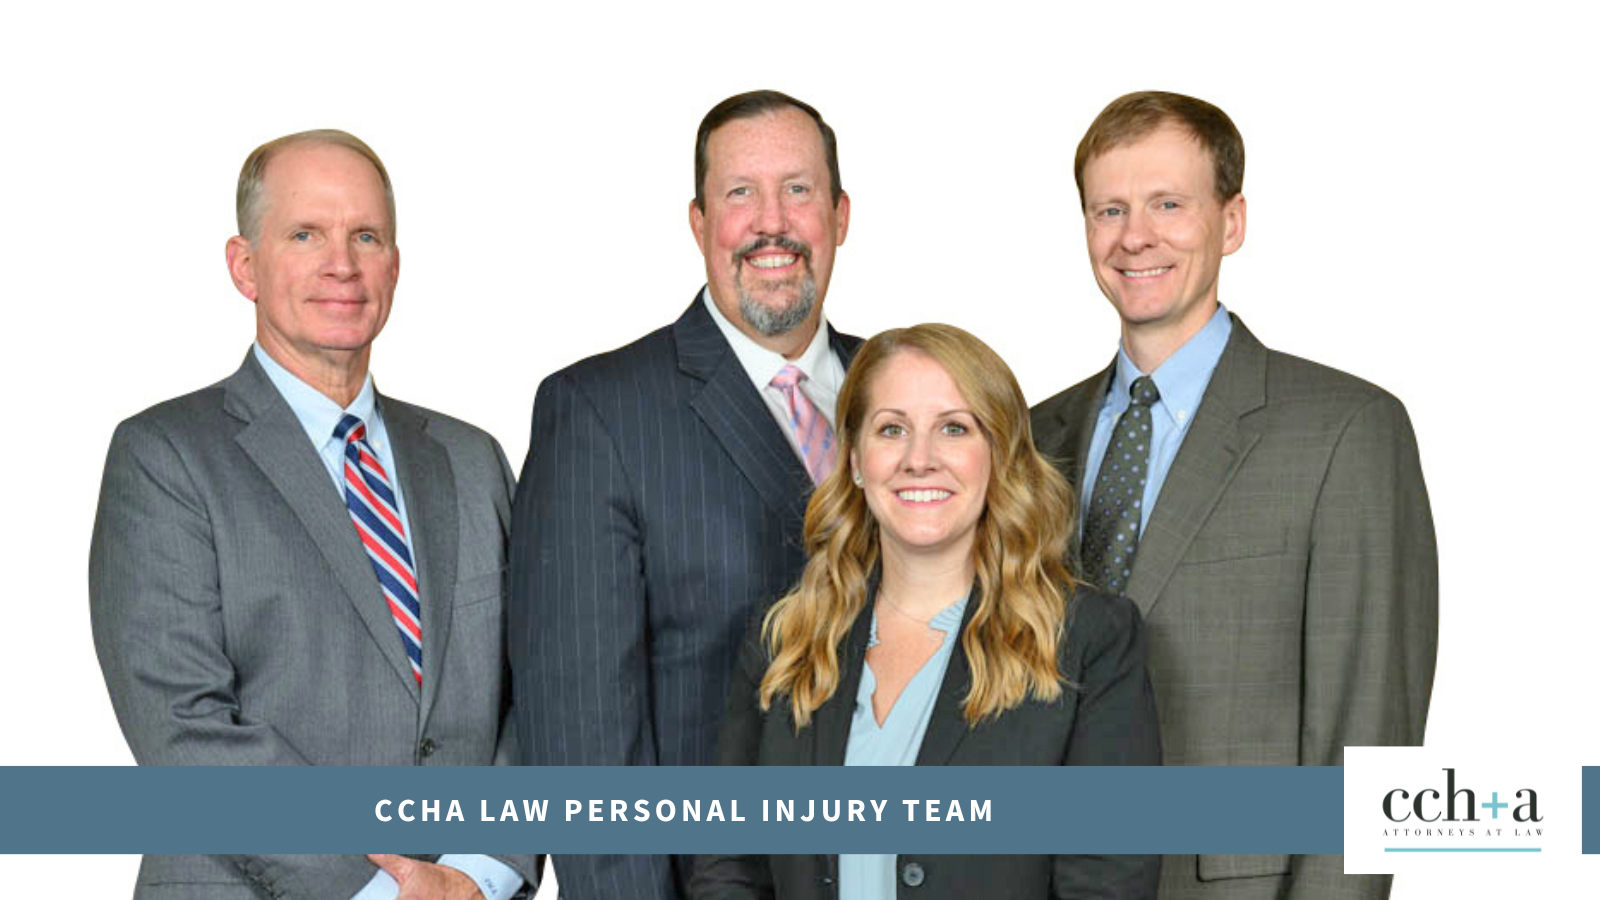 CCHA Law Personal Injury Team